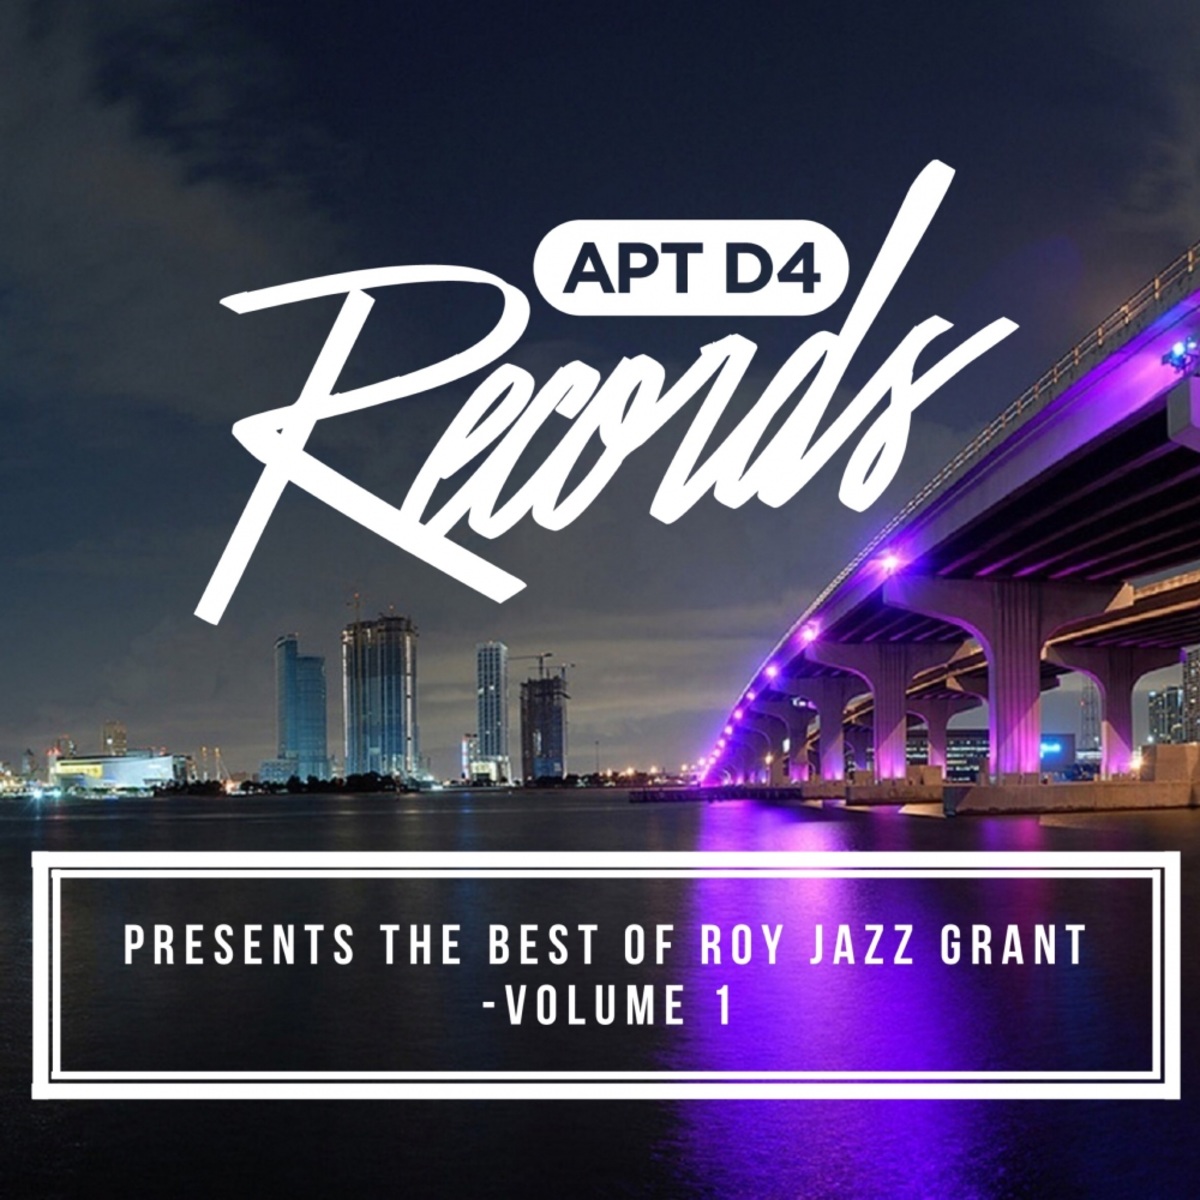 Roy Jazz Grant - The Best of Roy Jazz Grant / Apt D4 Records